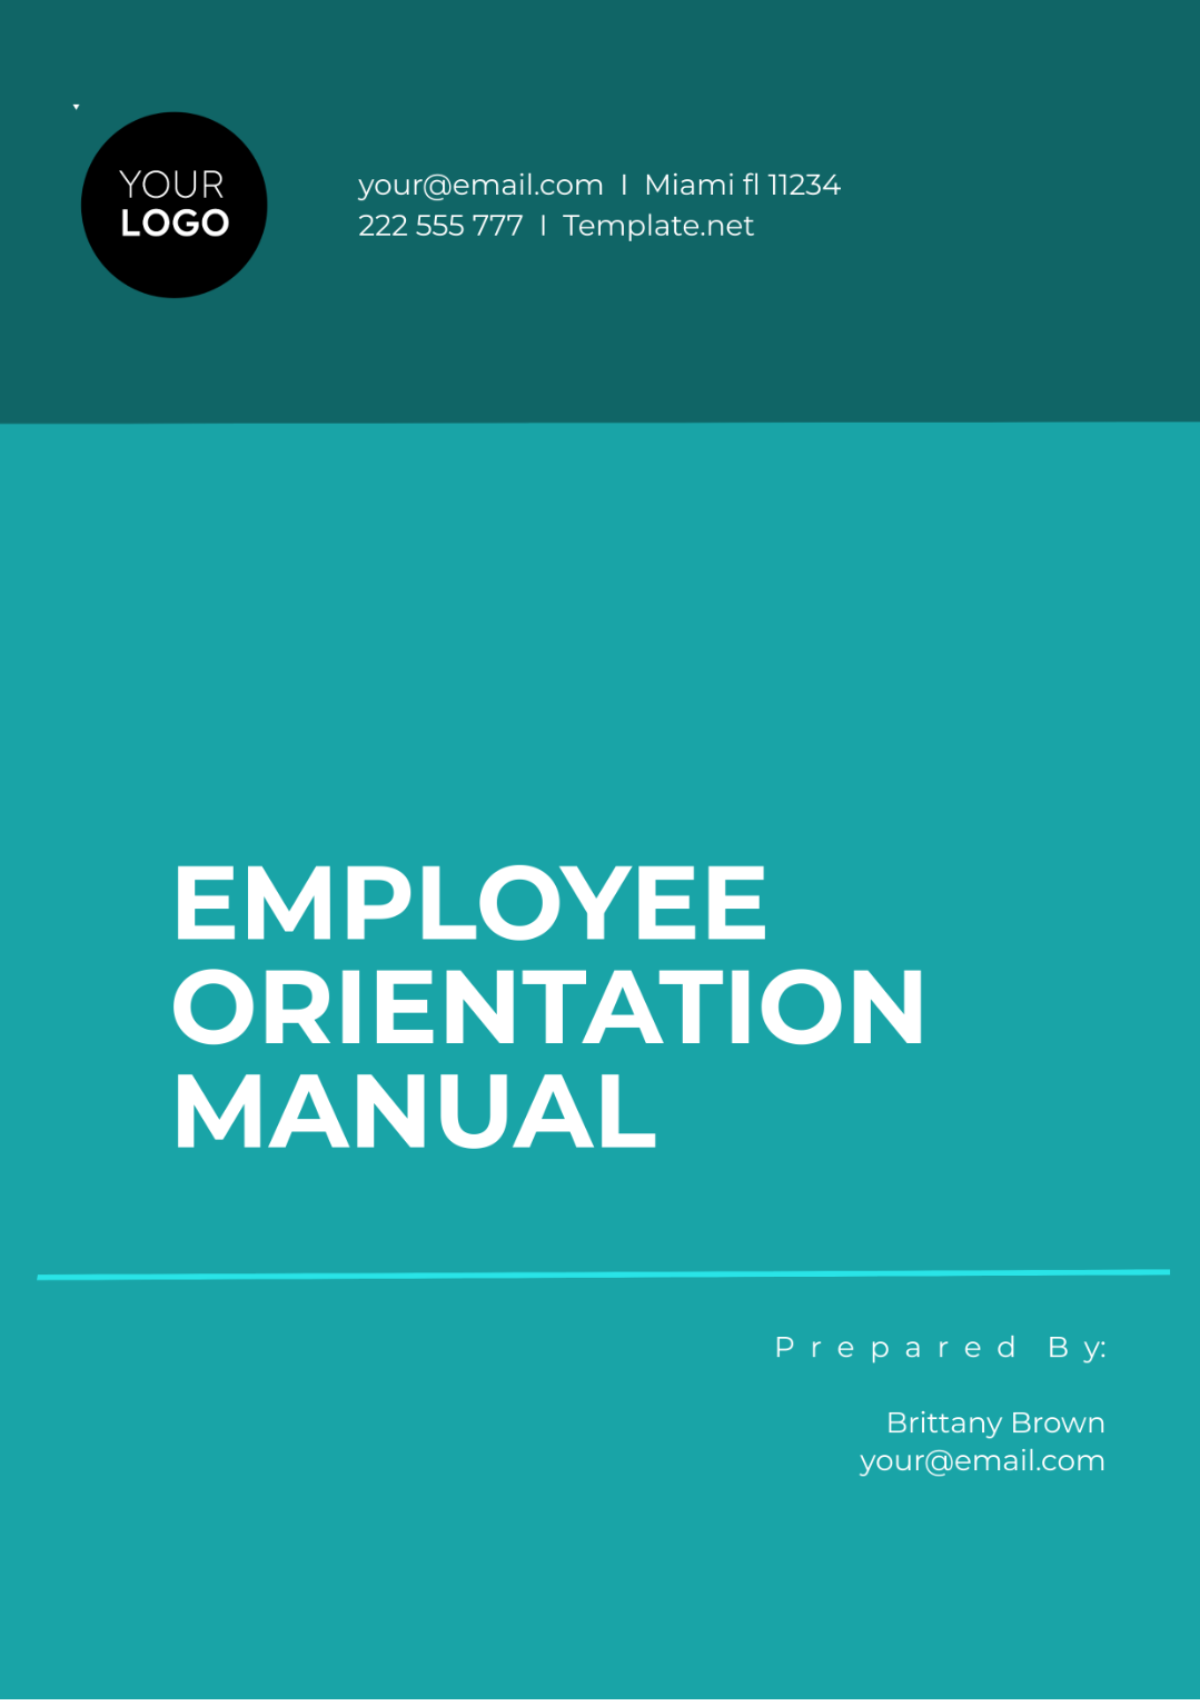 Employee Orientation Manual Template